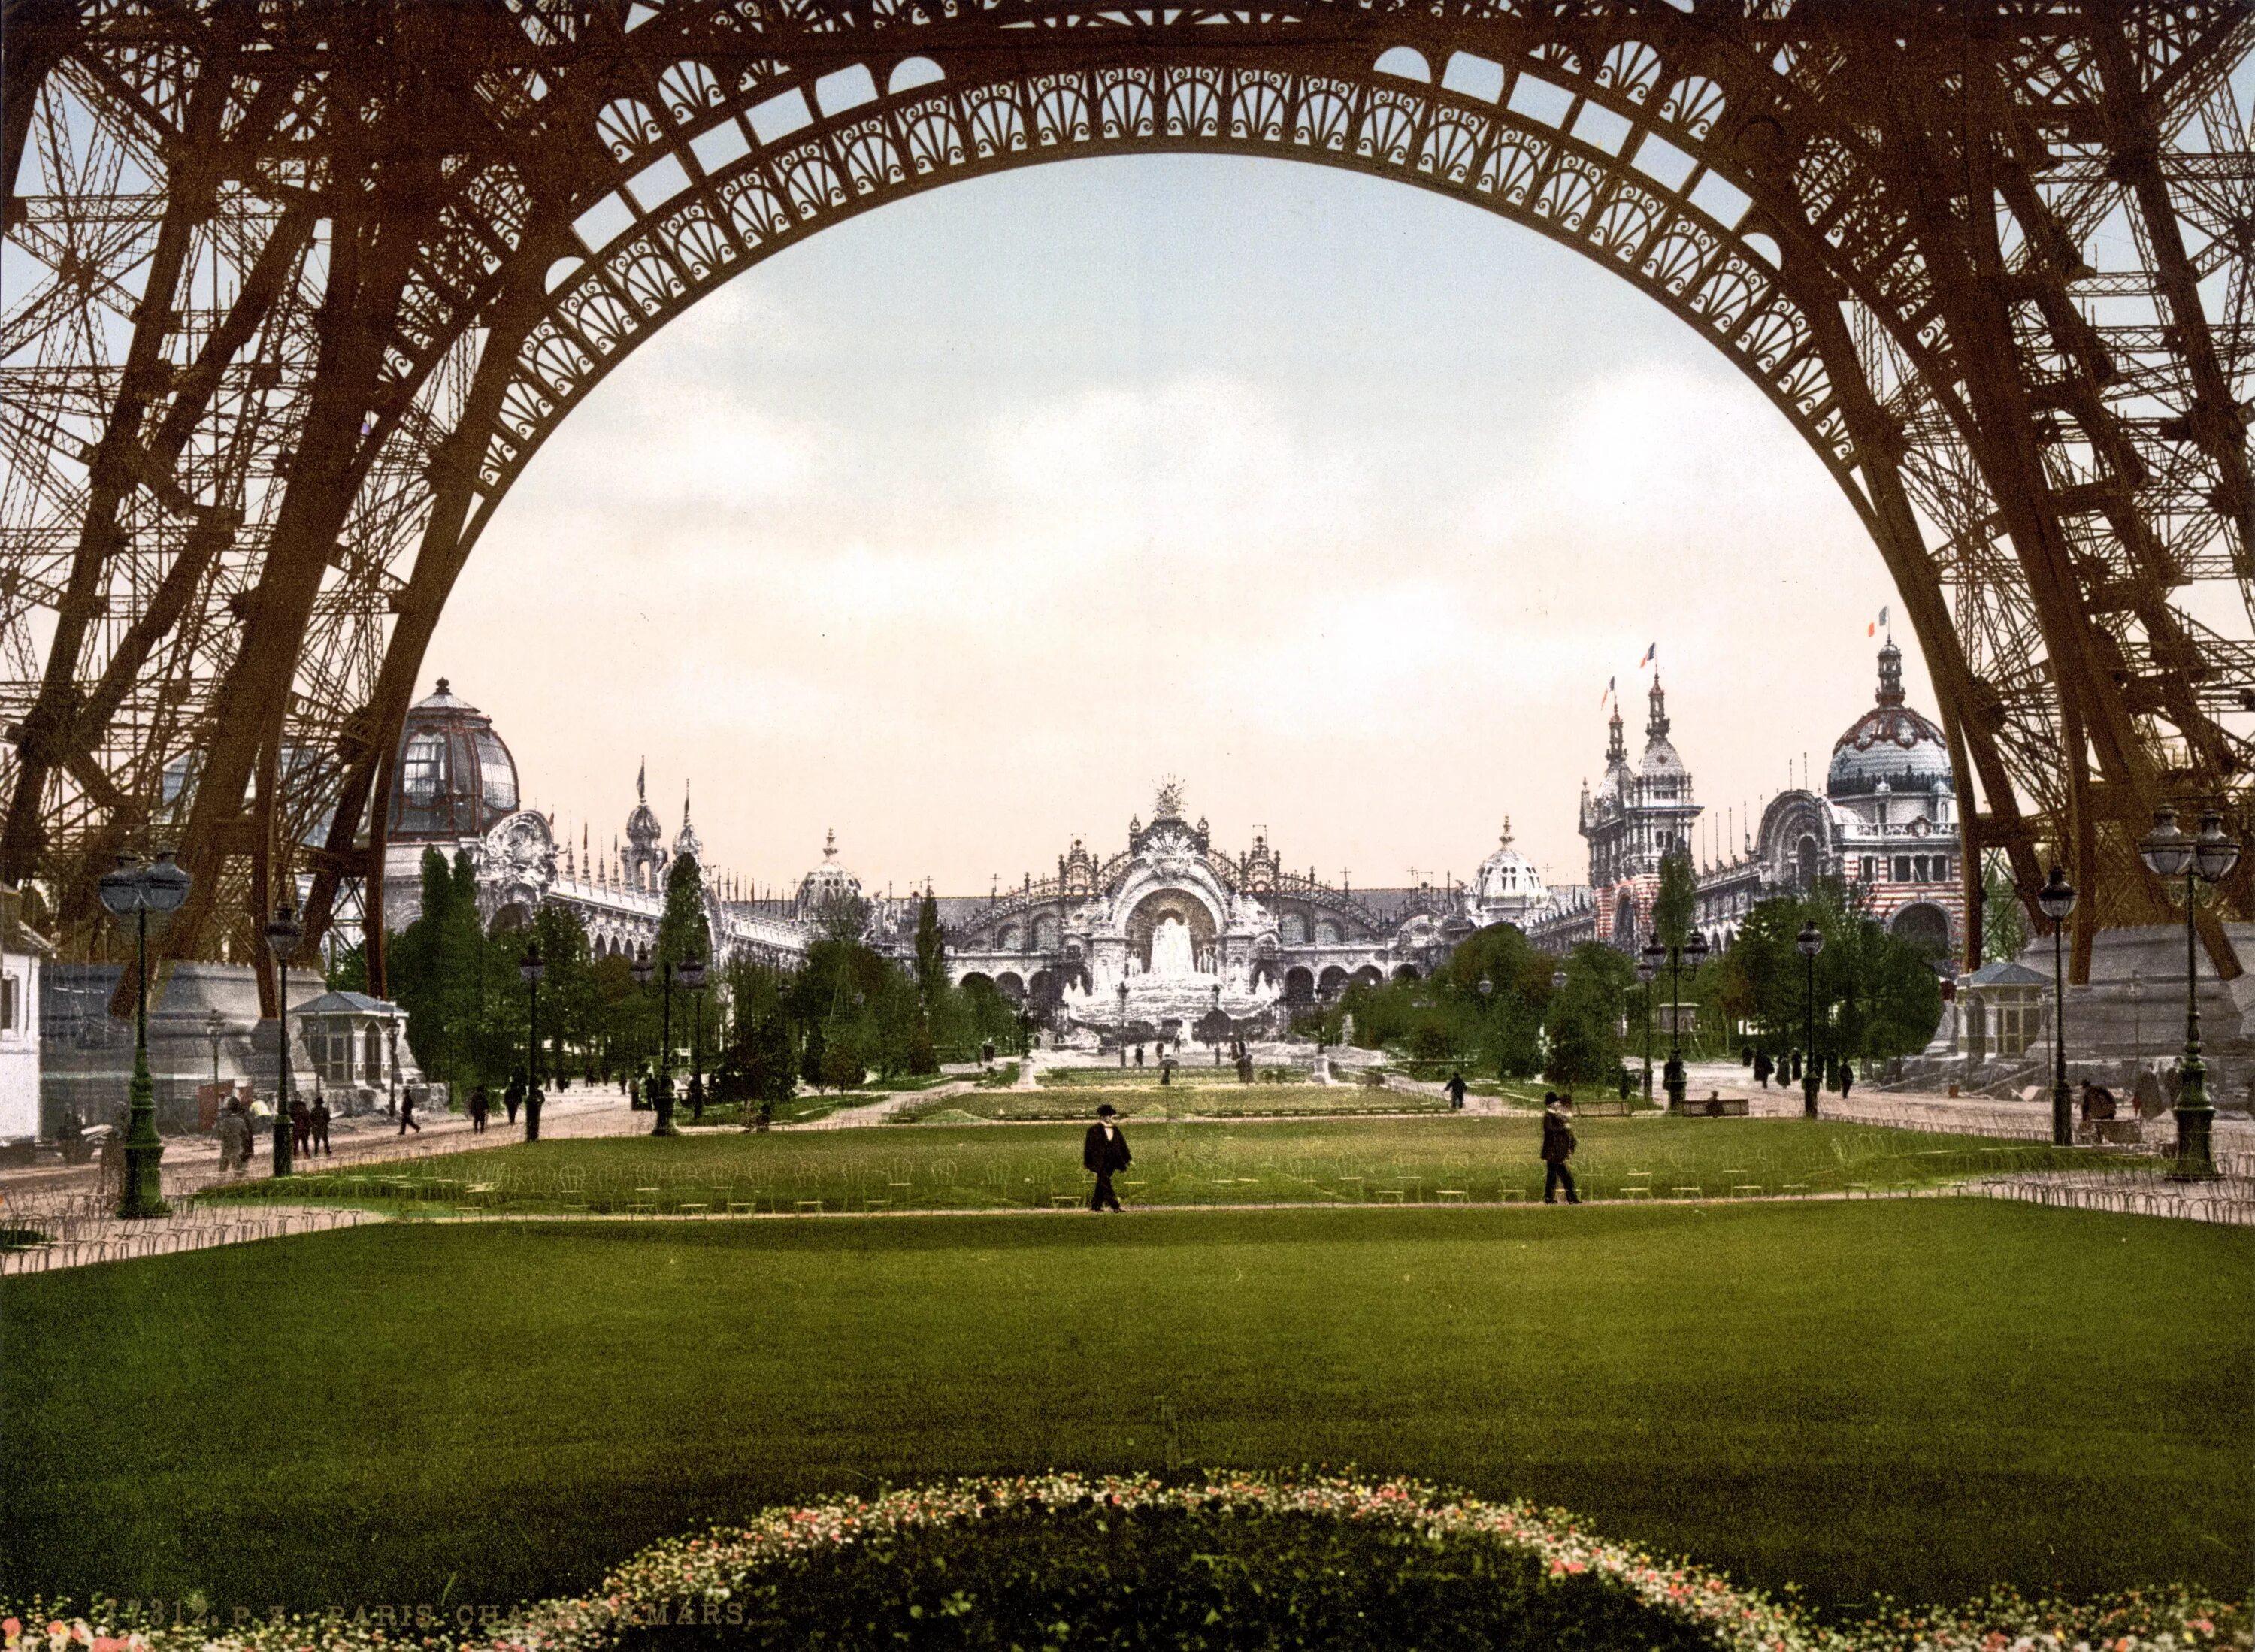 Exposition universelle – Париж (1900). Париж Иль де Франс. Эйфелева башня в Париже 1900. Париж 19 век Эйфелева башня.